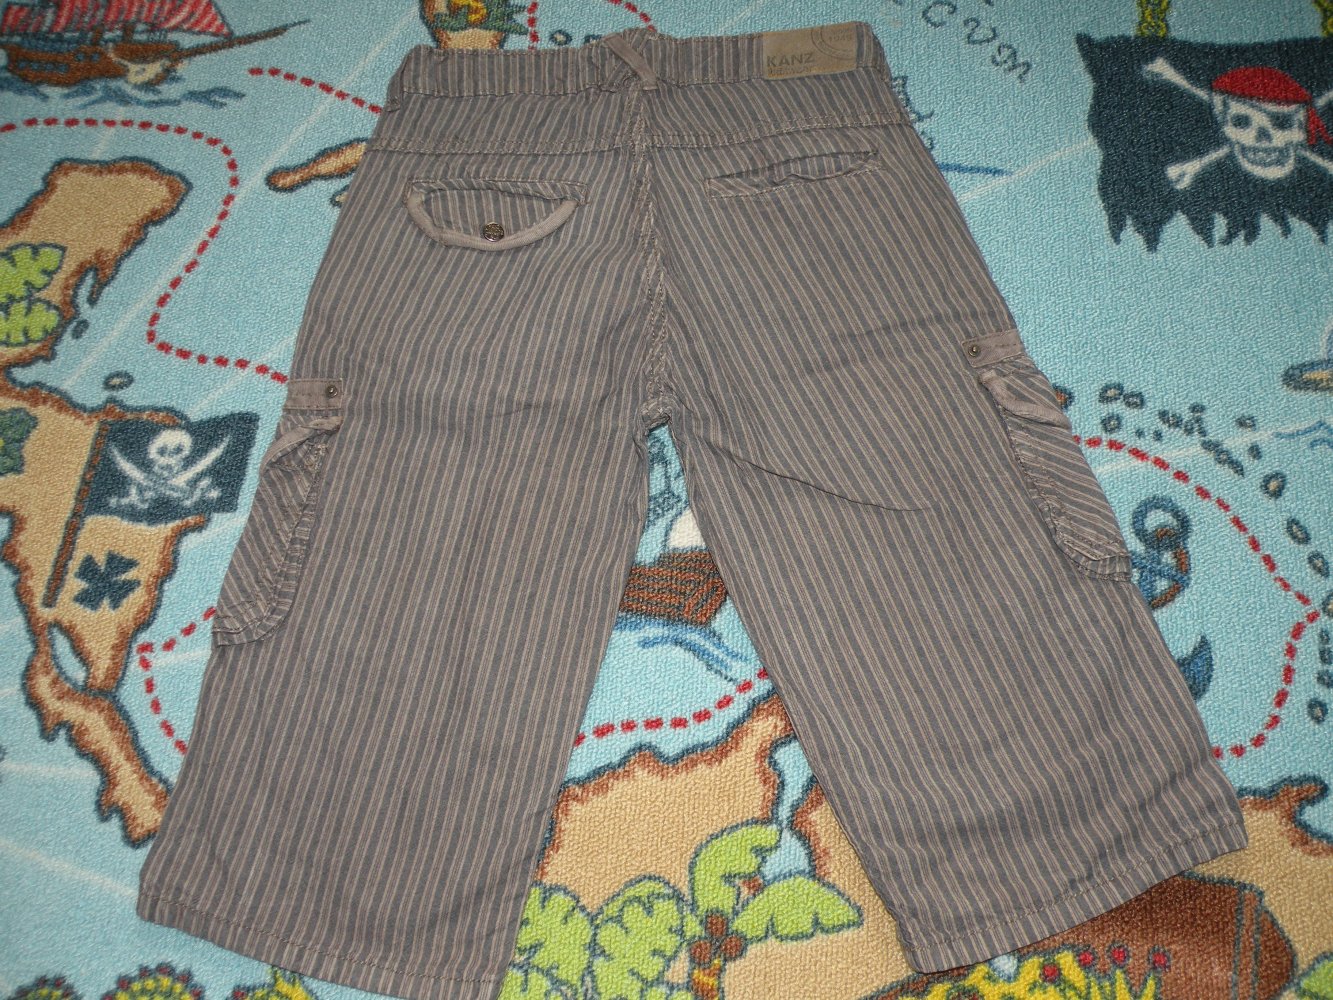 Jungen Sommer Jeans Shorts Bermudas Gr. 152 KANZ guter Zustand Nr. 7 braun gestreift